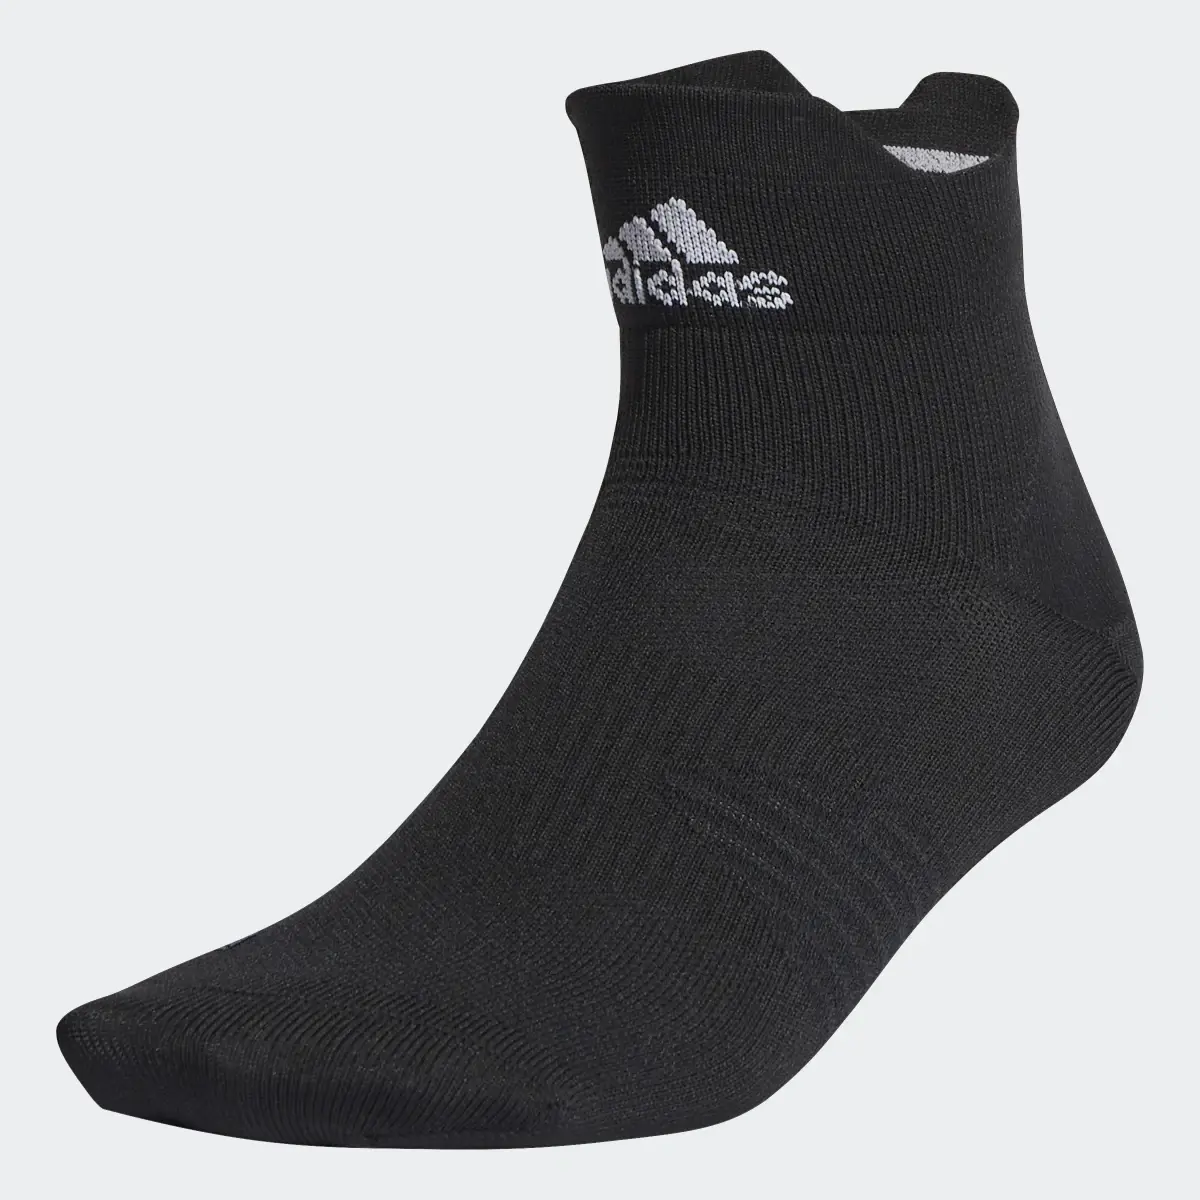 Adidas Ankle Performance Running Socks. 2